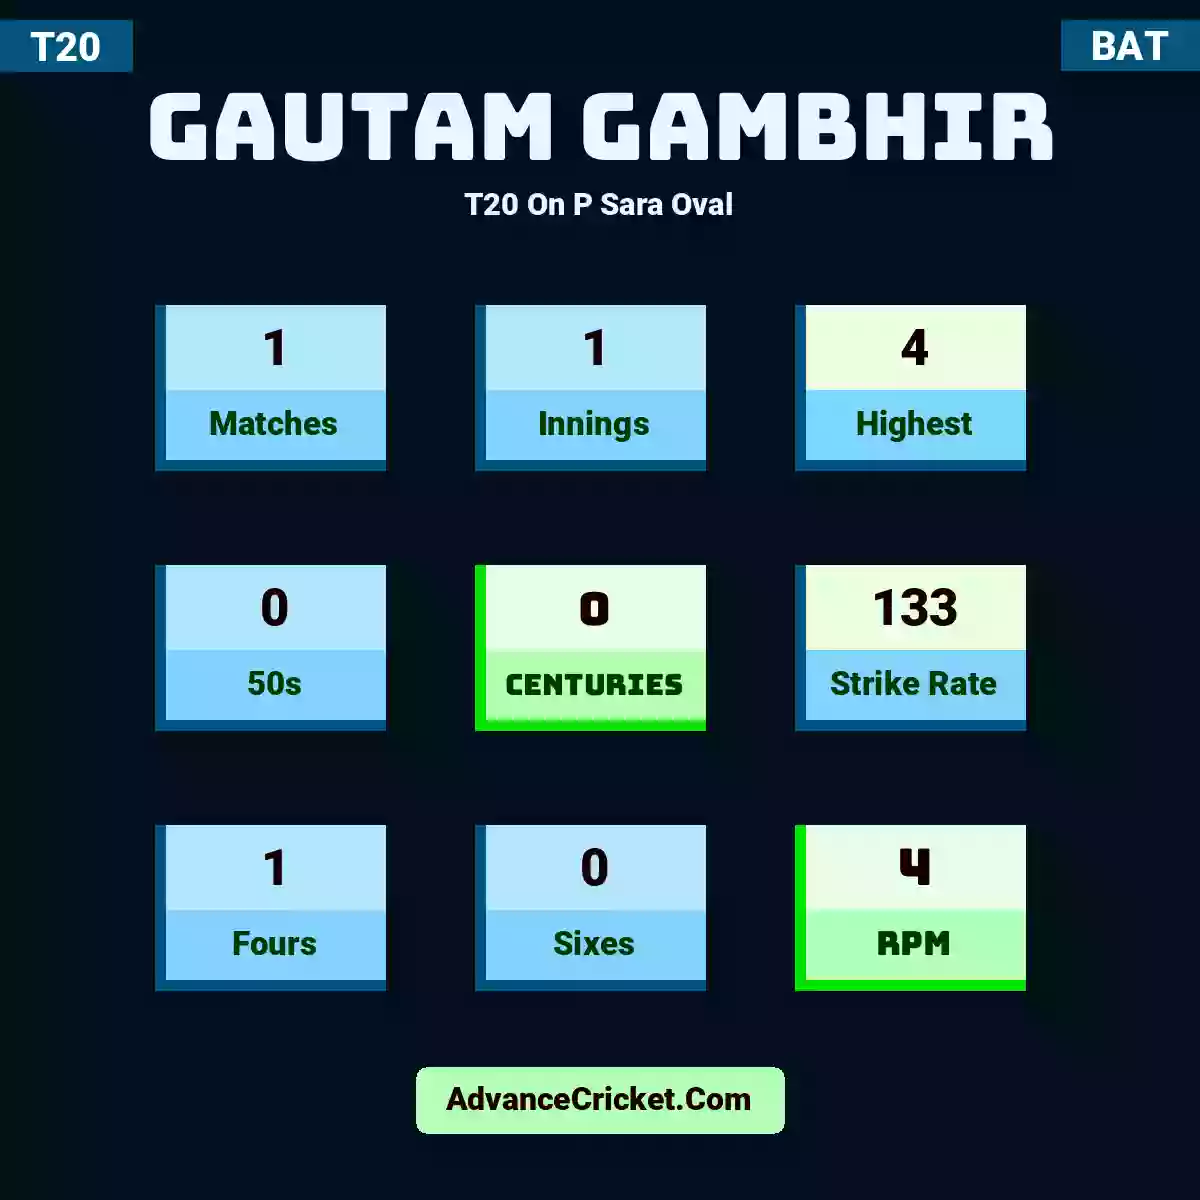 Gautam Gambhir T20  On P Sara Oval, Gautam Gambhir played 1 matches, scored 4 runs as highest, 0 half-centuries, and 0 centuries, with a strike rate of 133. G.Gambhir hit 1 fours and 0 sixes, with an RPM of 4.